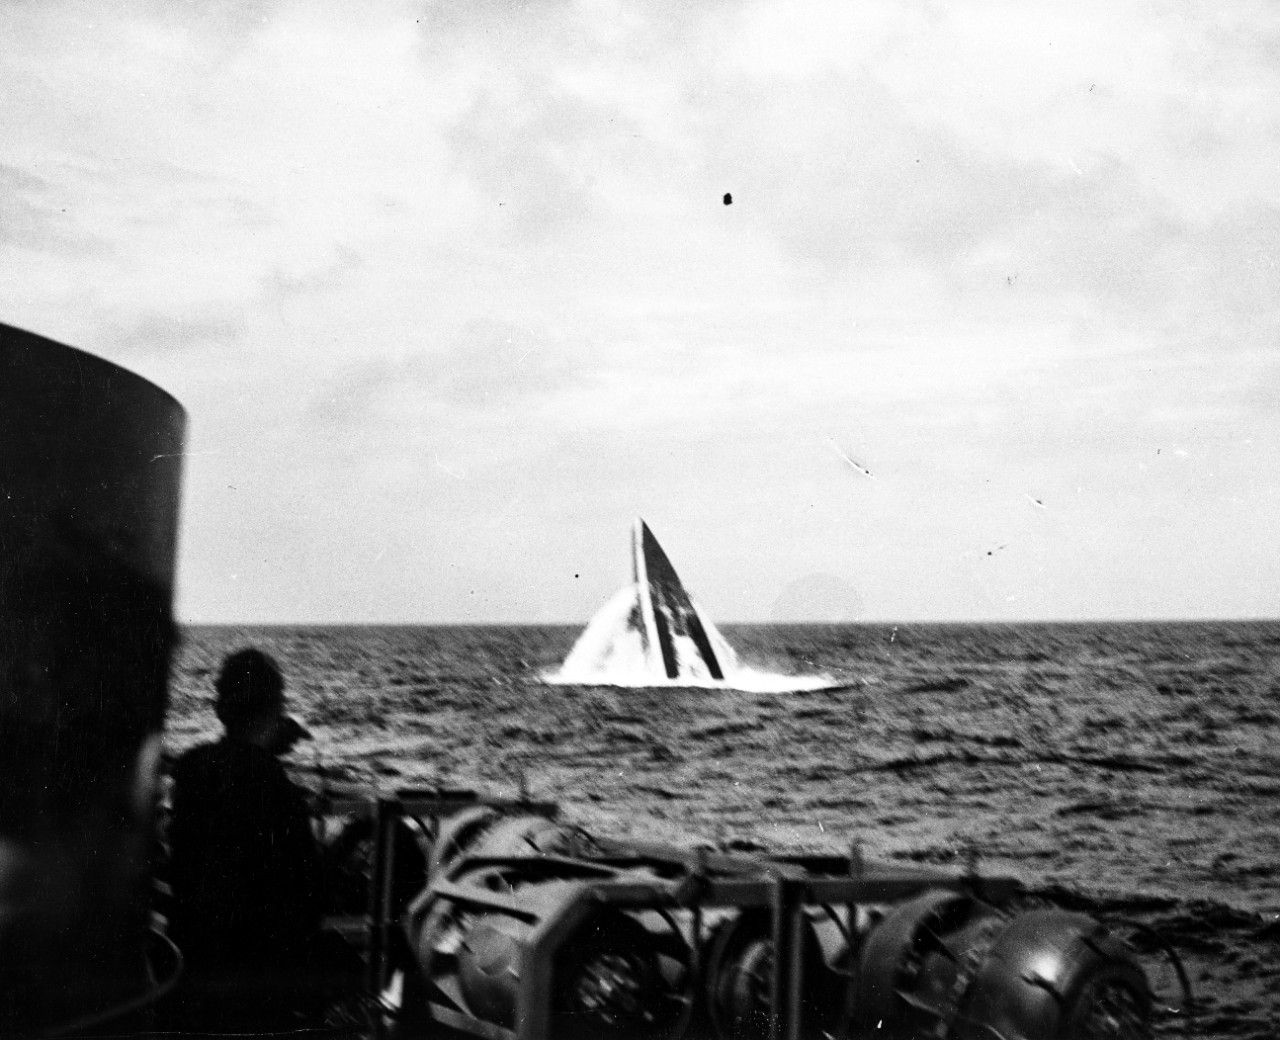 80-G-228416 Sinking of German Submarine U-515